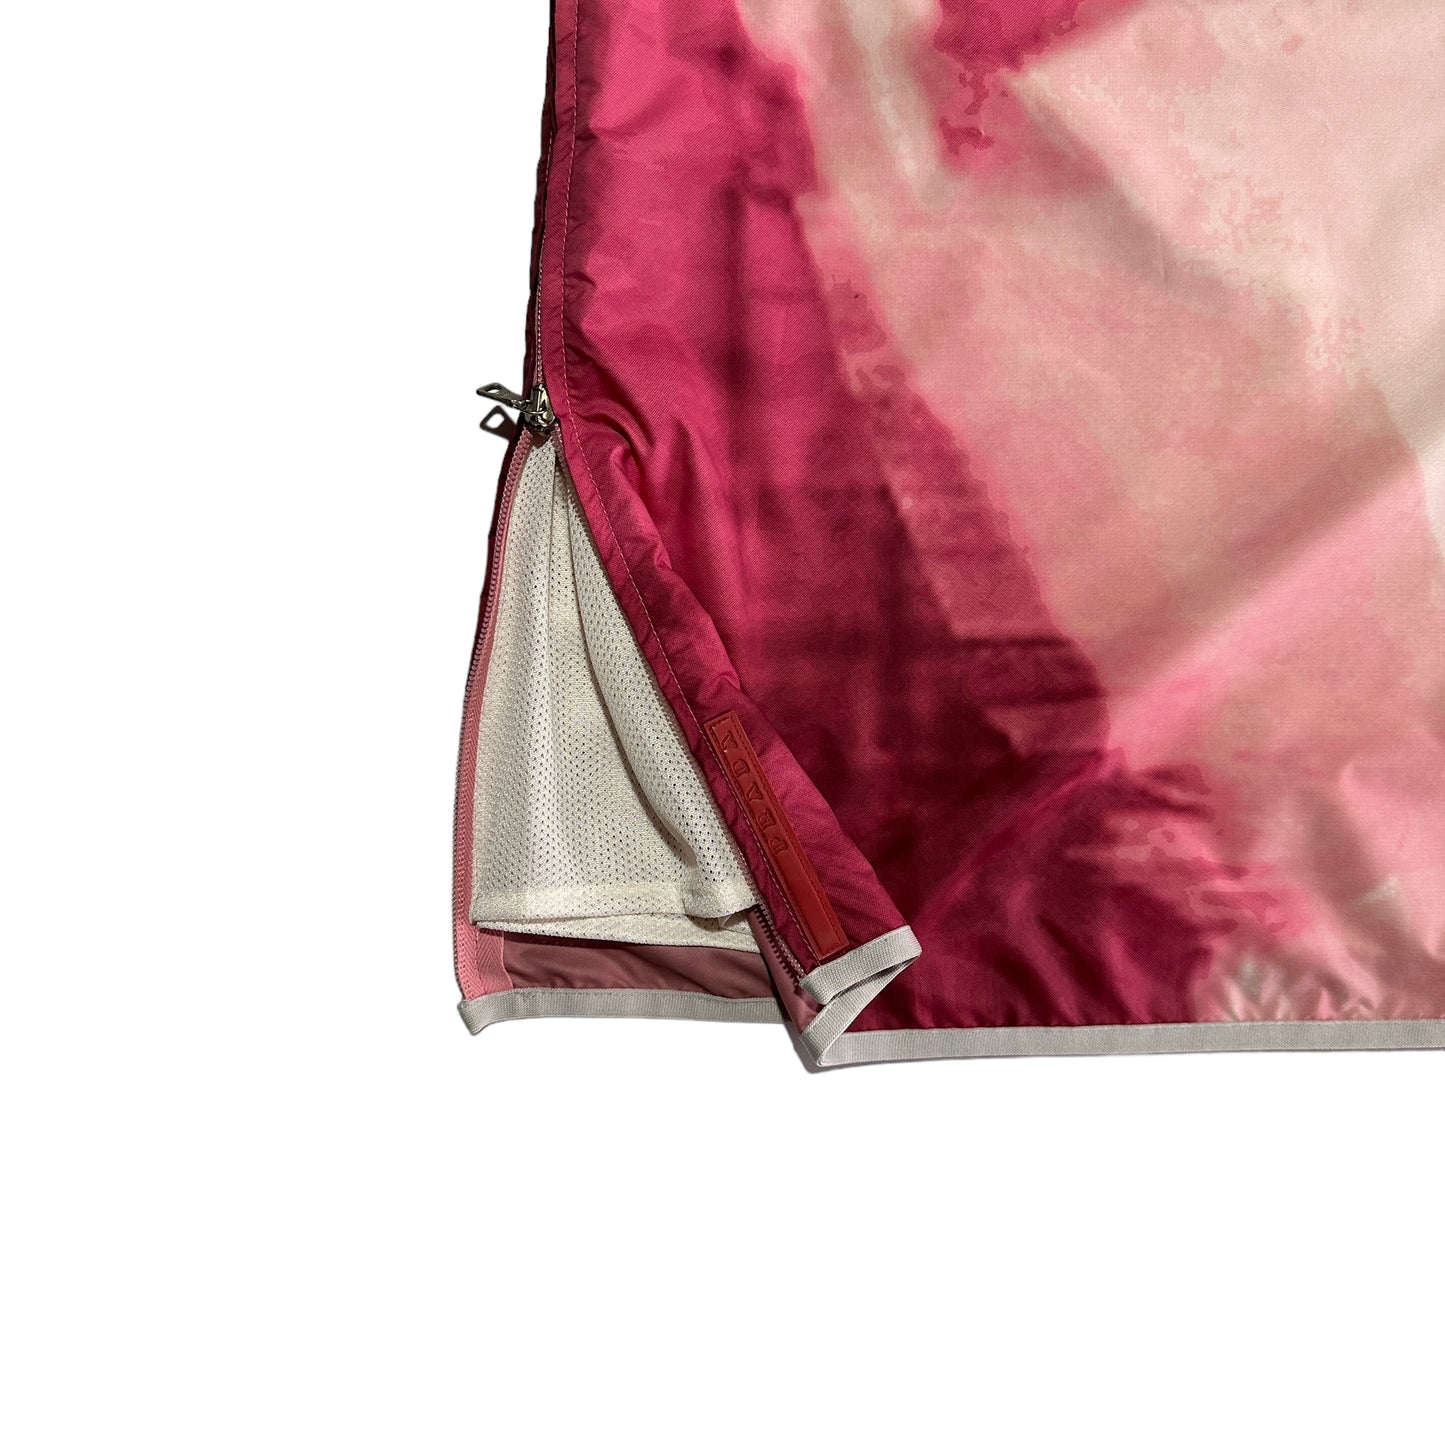 S/S 2000 Prada Sport Abstract Pink Cloud Print Skirt (42)